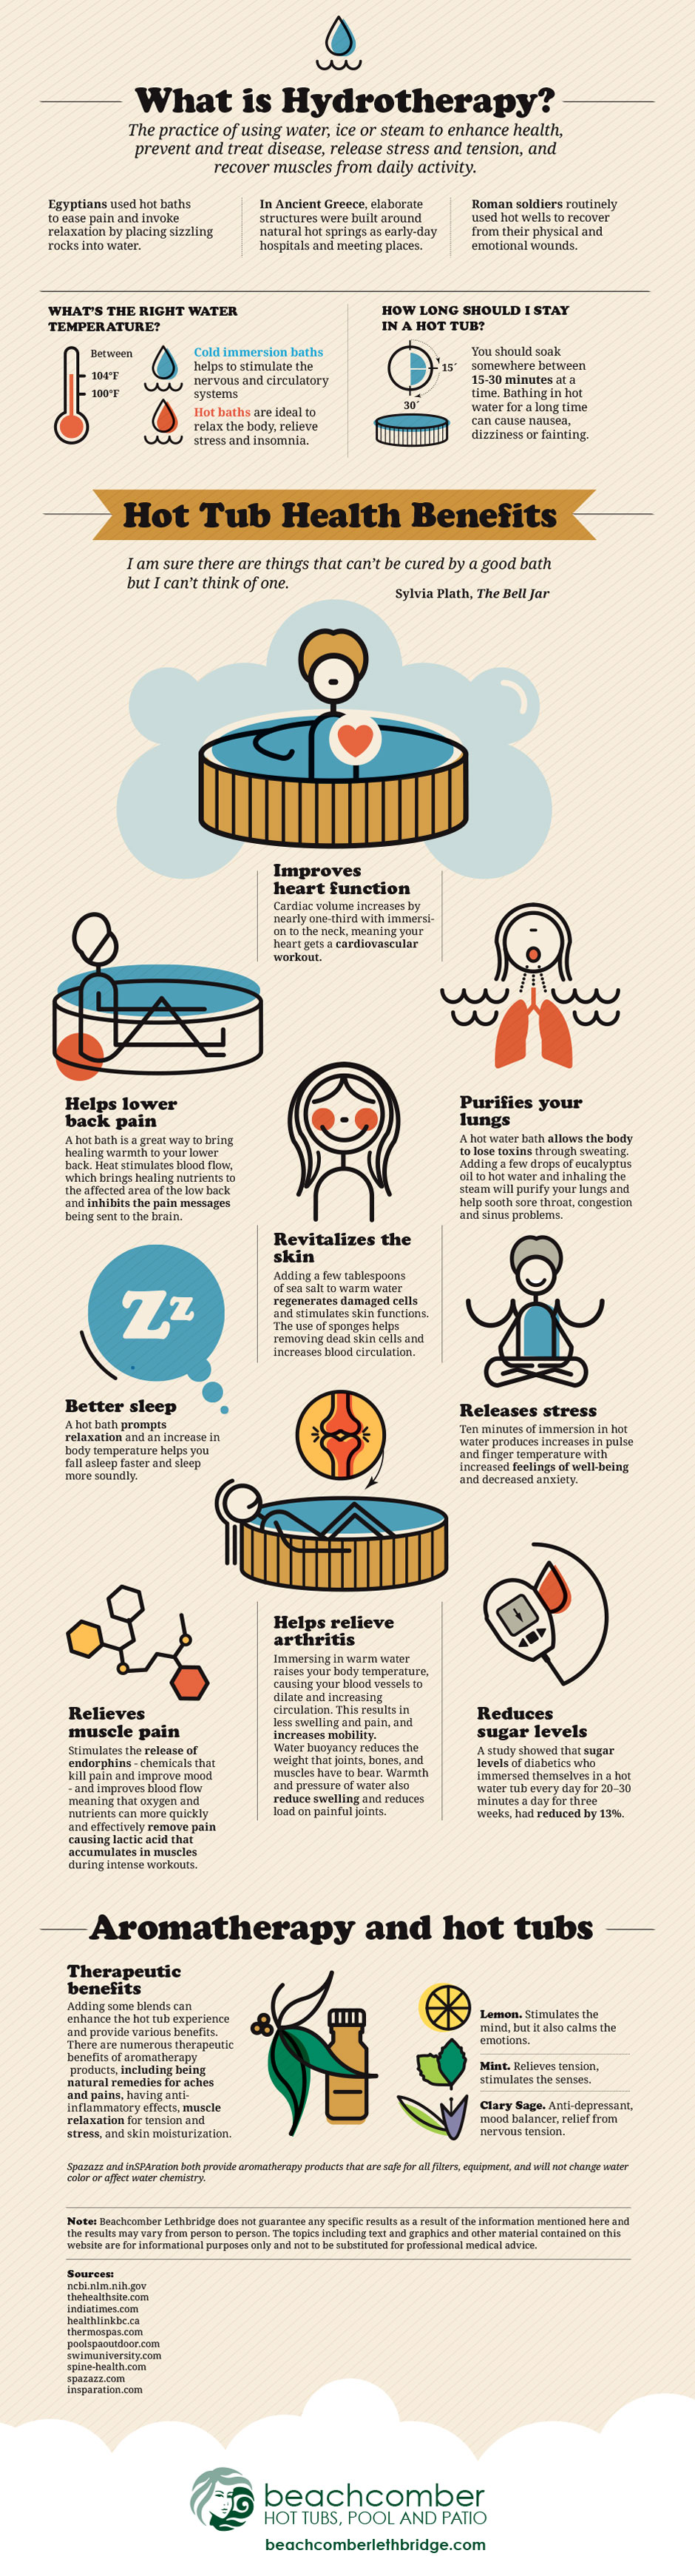 hot-tub-health-benefits-infographic.jpg